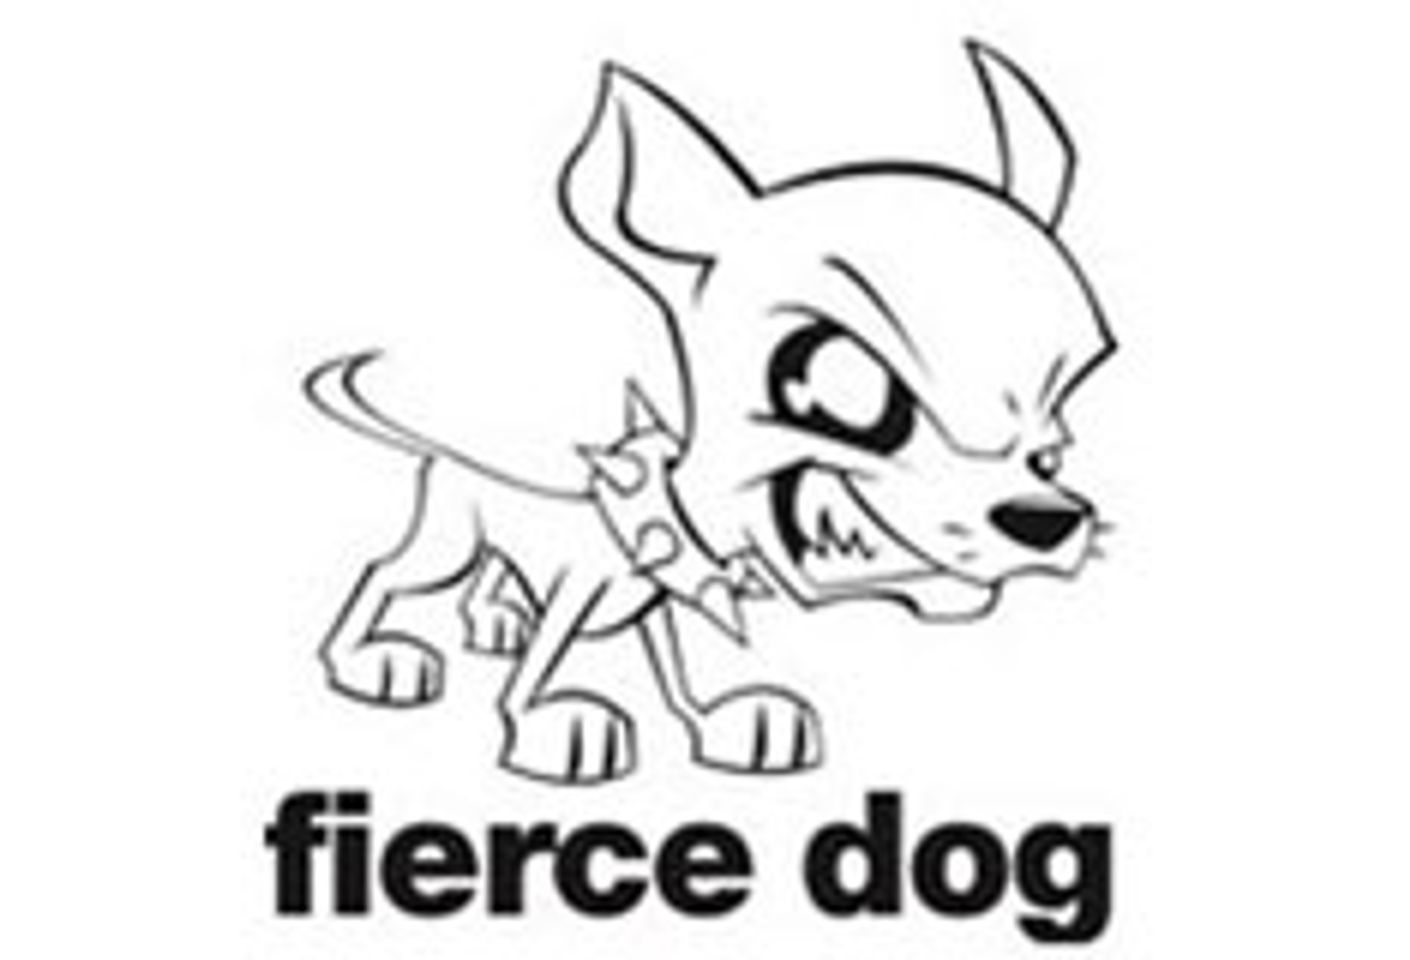 Company Profile: Fierce Dog